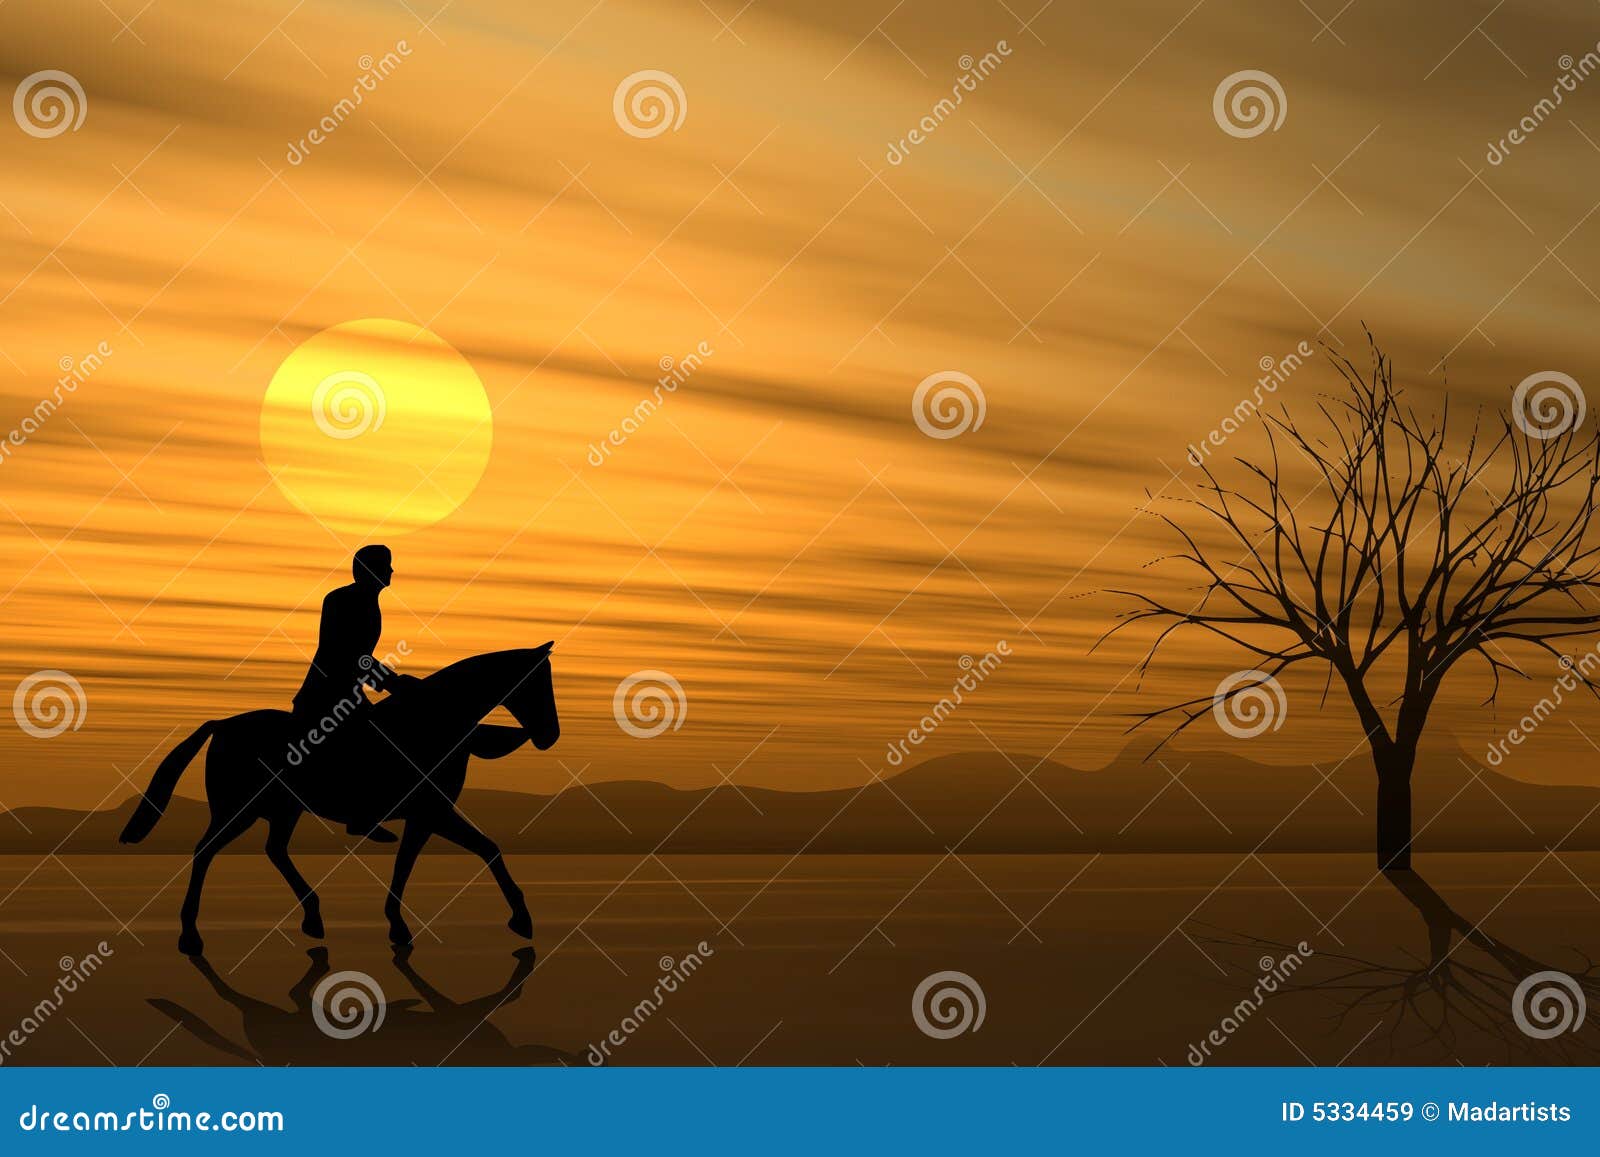 horseback ride at sunset